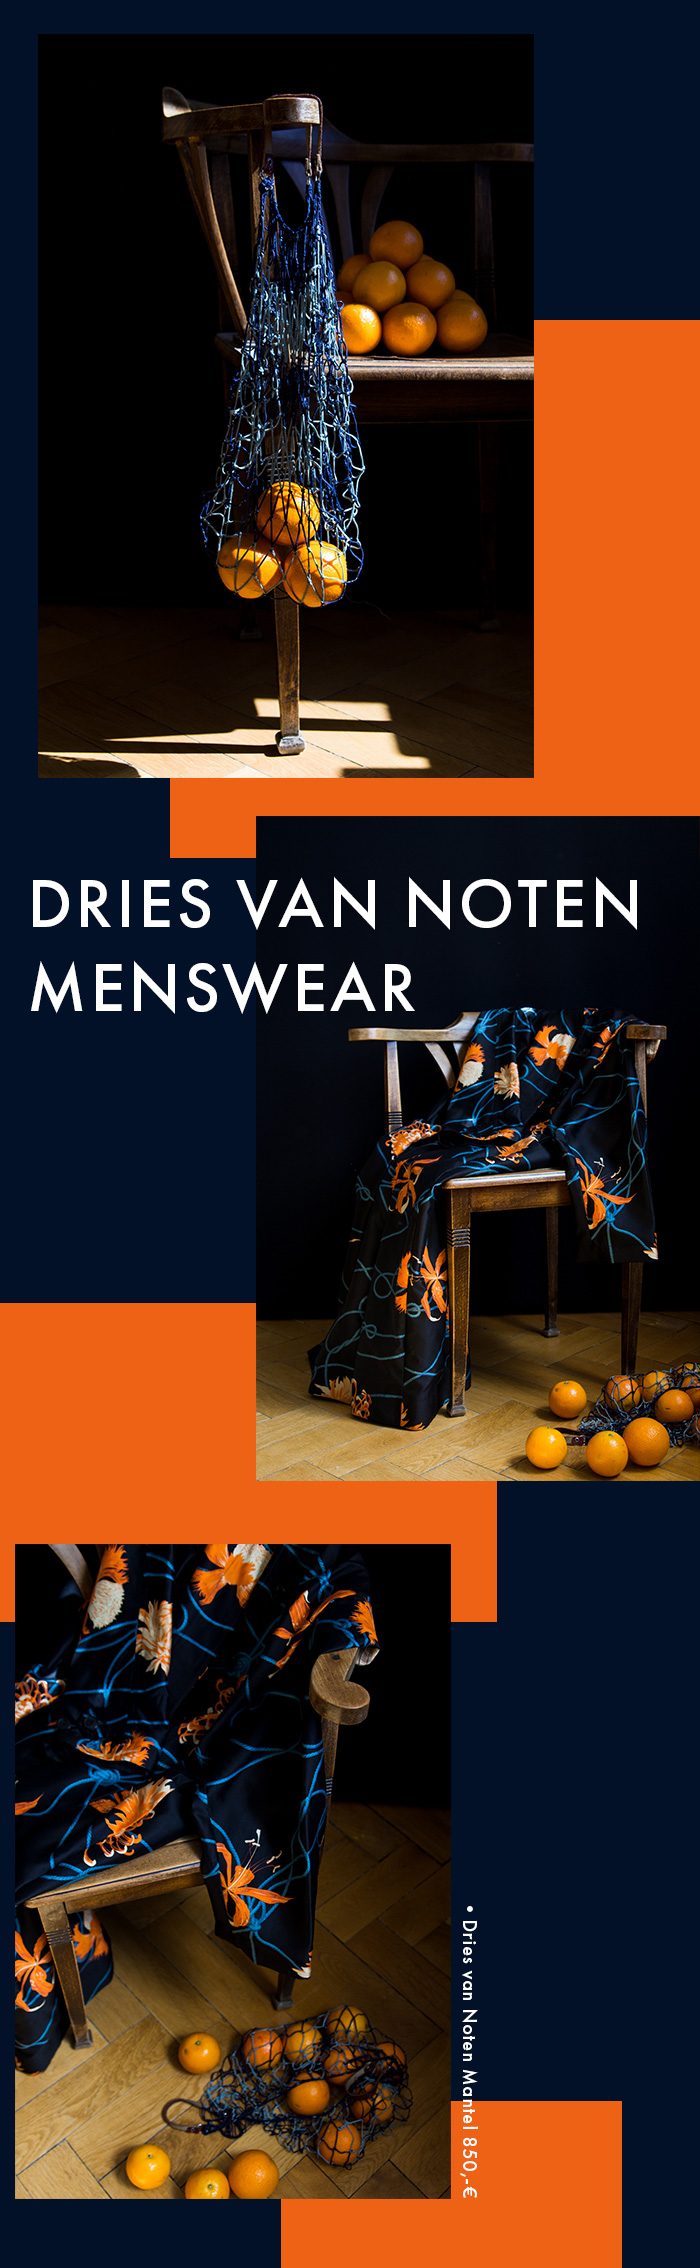 Dries van Noten - Menswear - Second Season-01